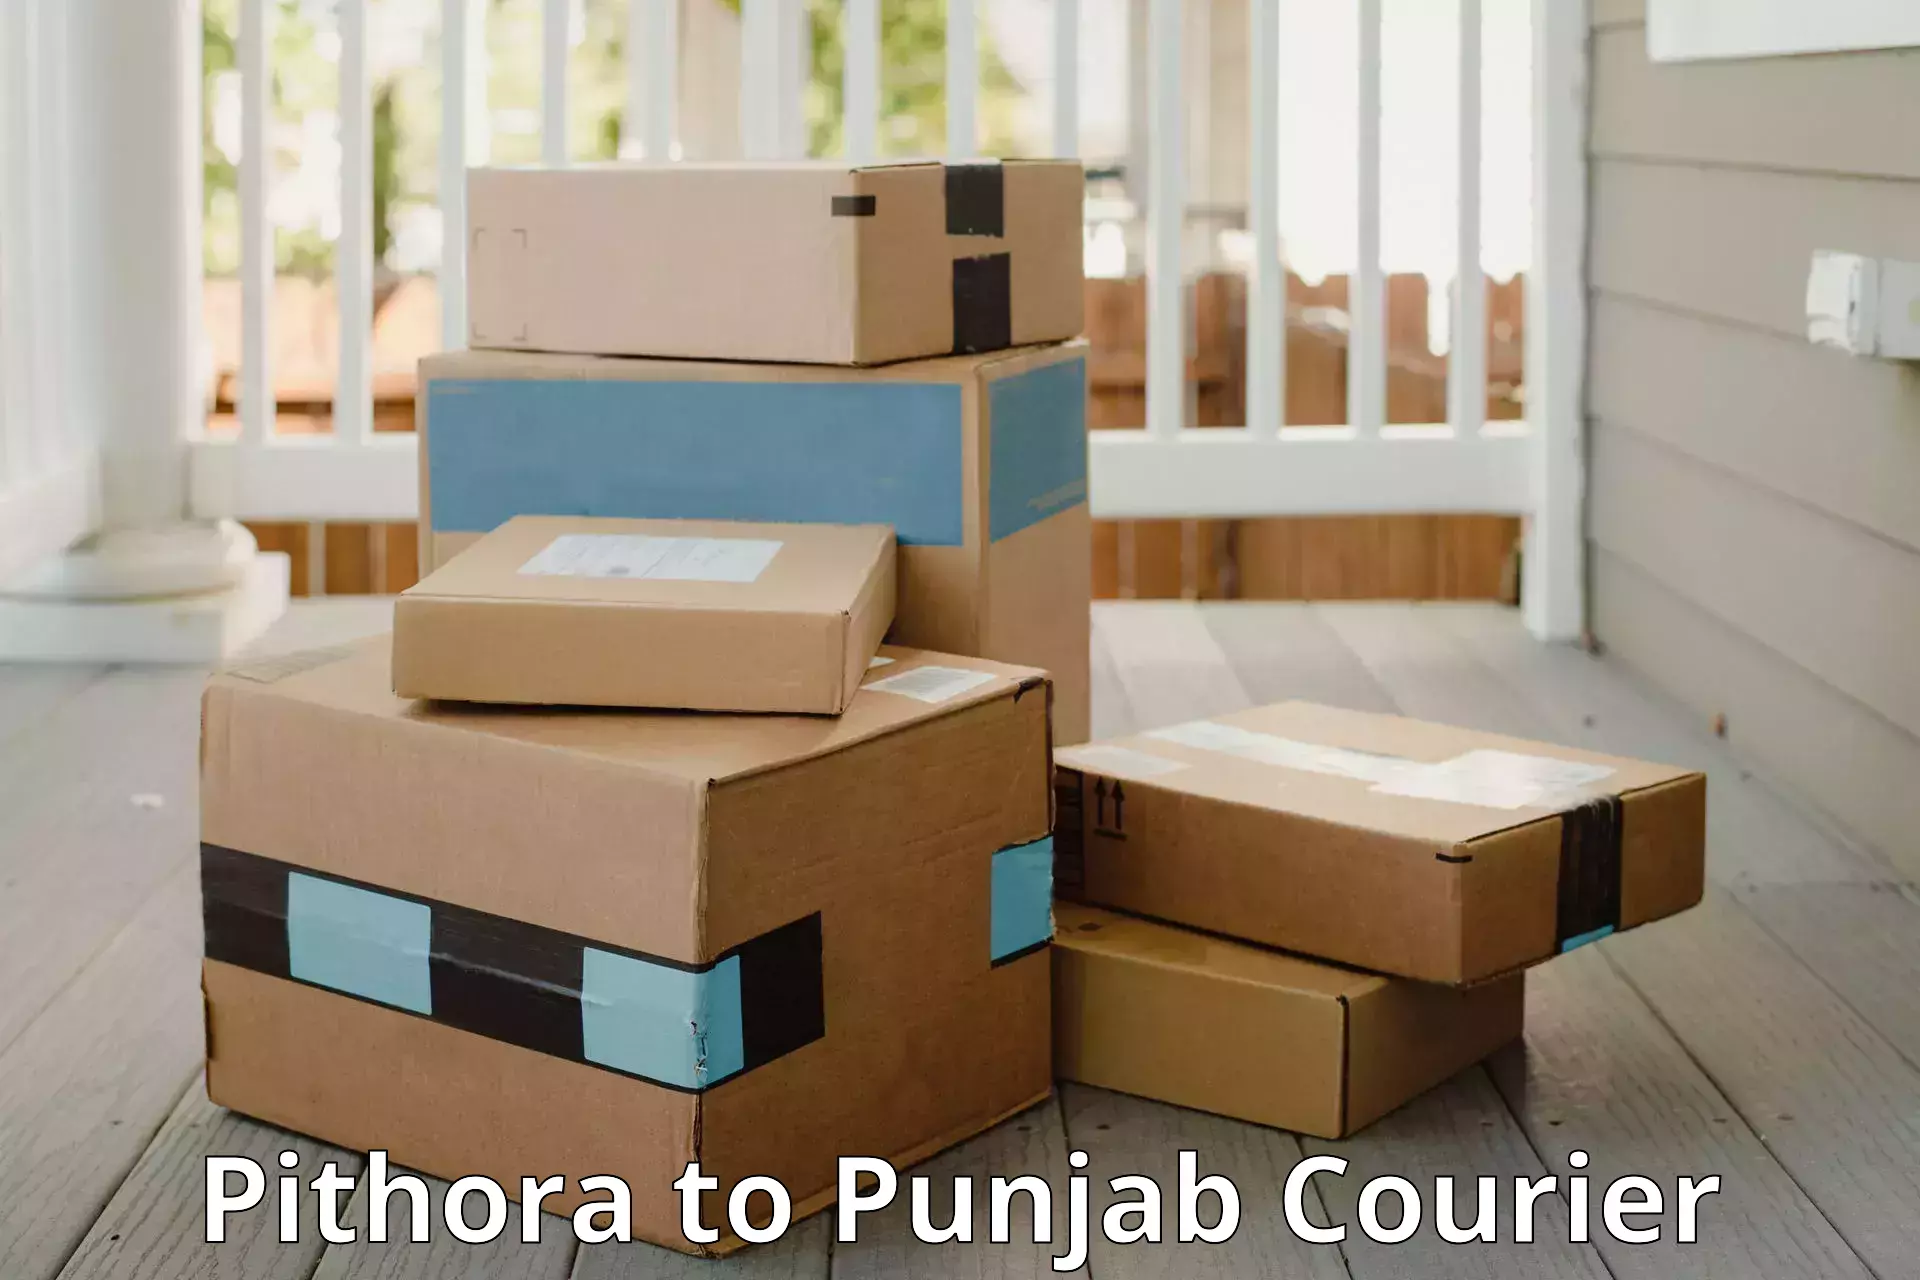 Door-to-door baggage service Pithora to Central University of Punjab Bathinda